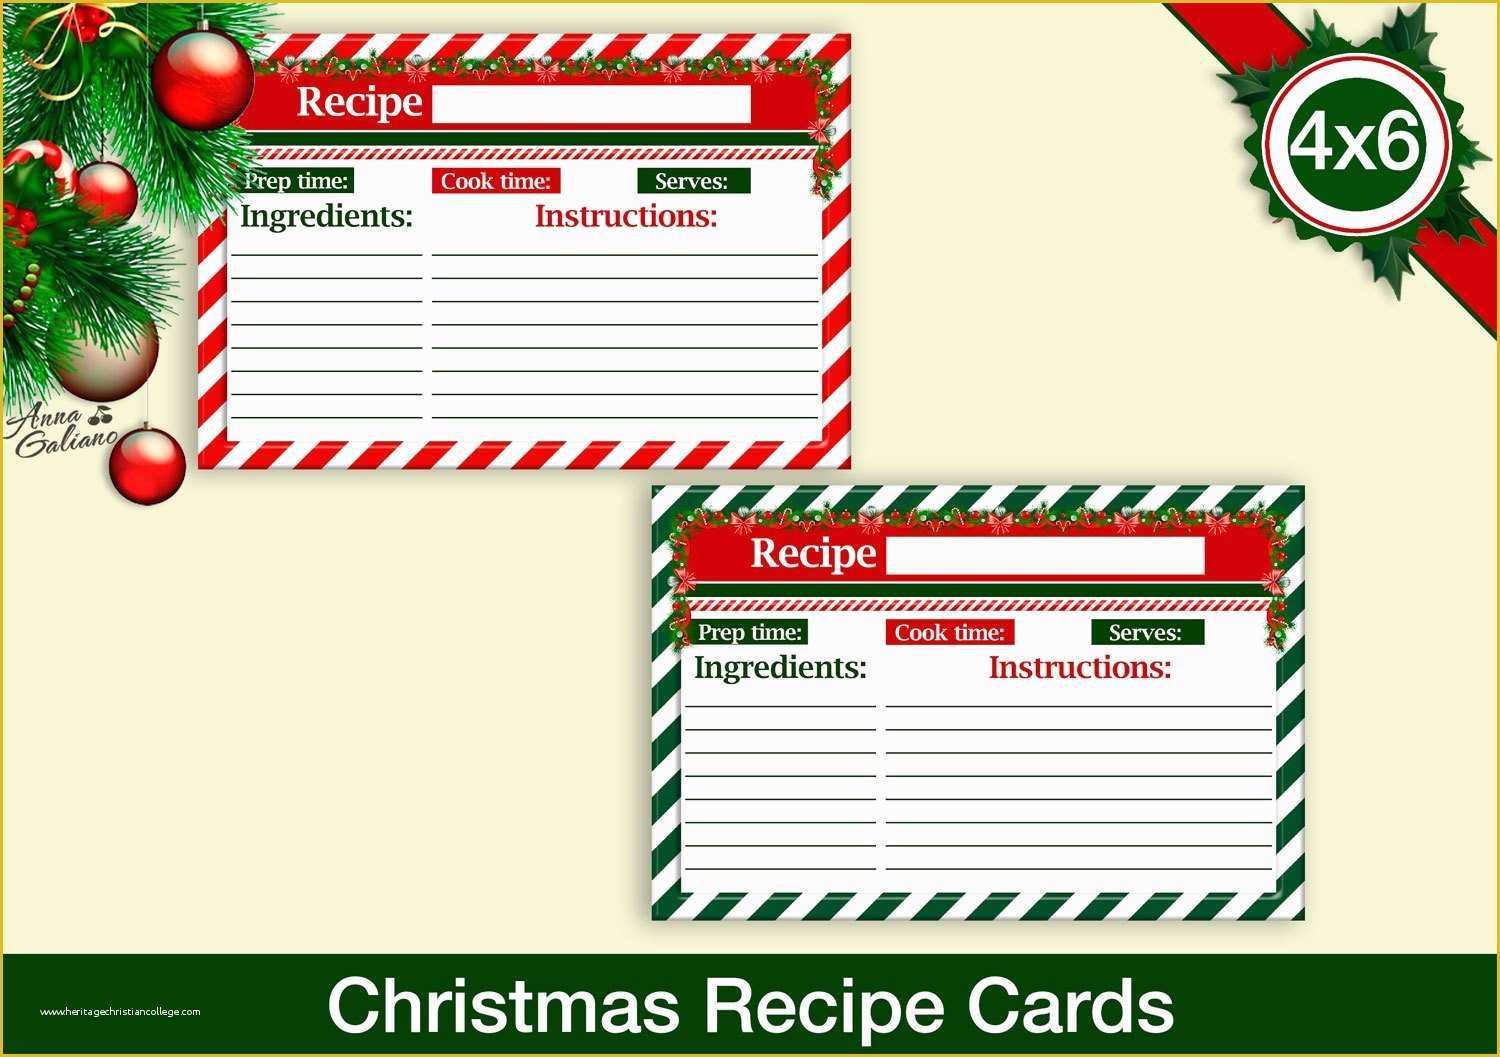 Free 4x6 Postcard Template Of Christmas Recipe Cards 4x6 Recipe Cards Printable Recipe